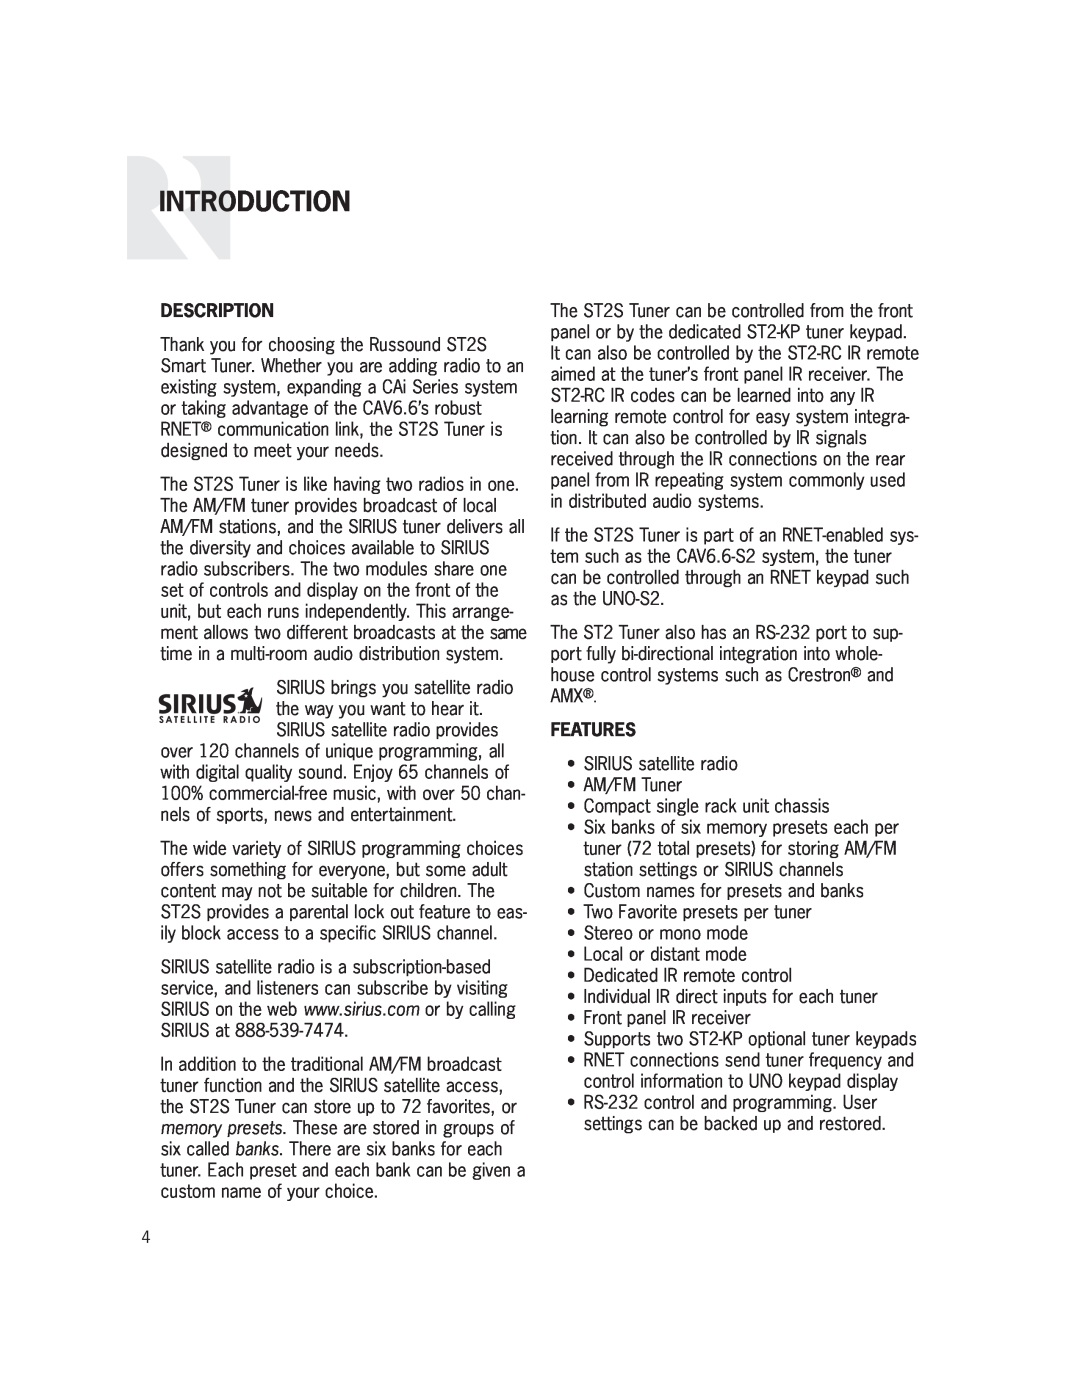 Russound ST2S installation manual Introduction, Description, Features 